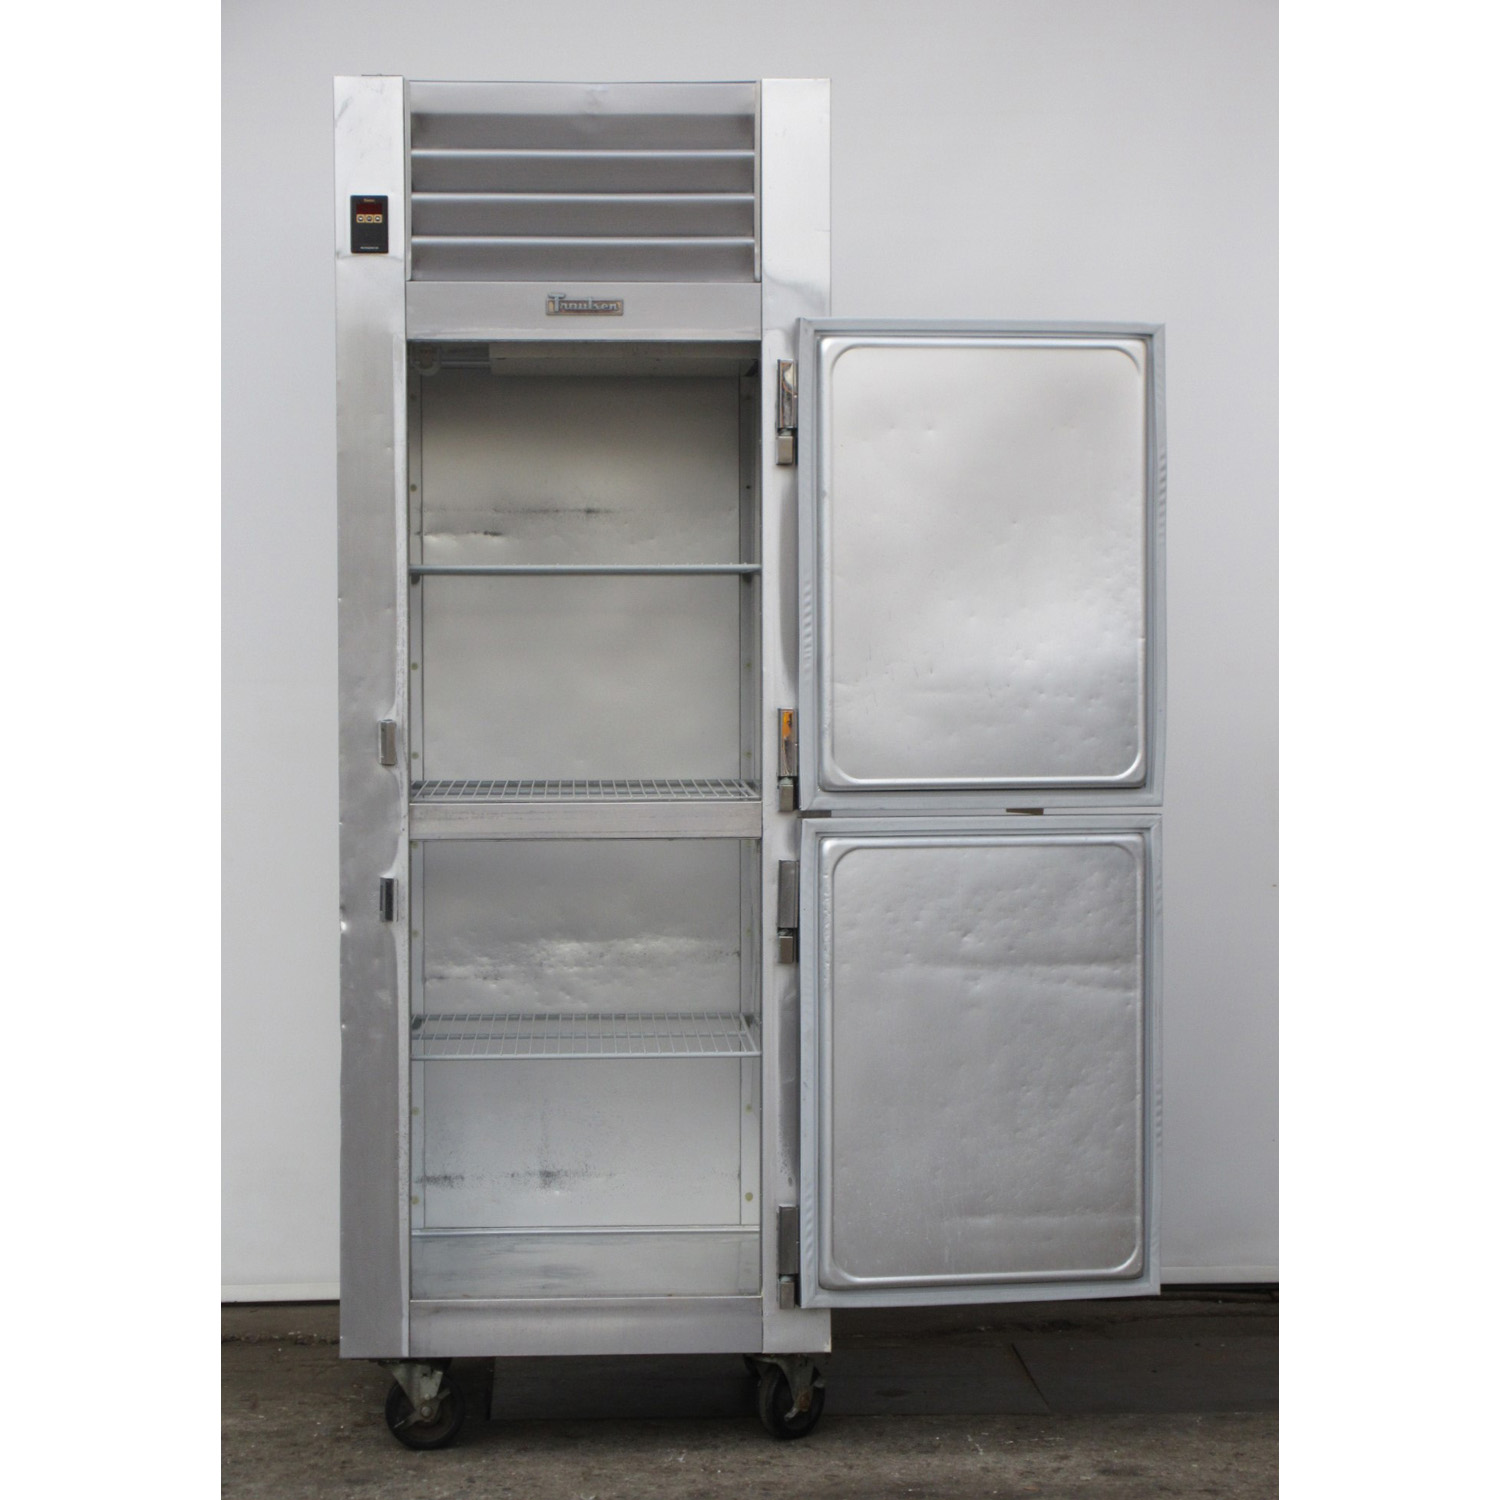 Traulsen G10000 1 Door Refrigerator, Used Very Good Condition image 1